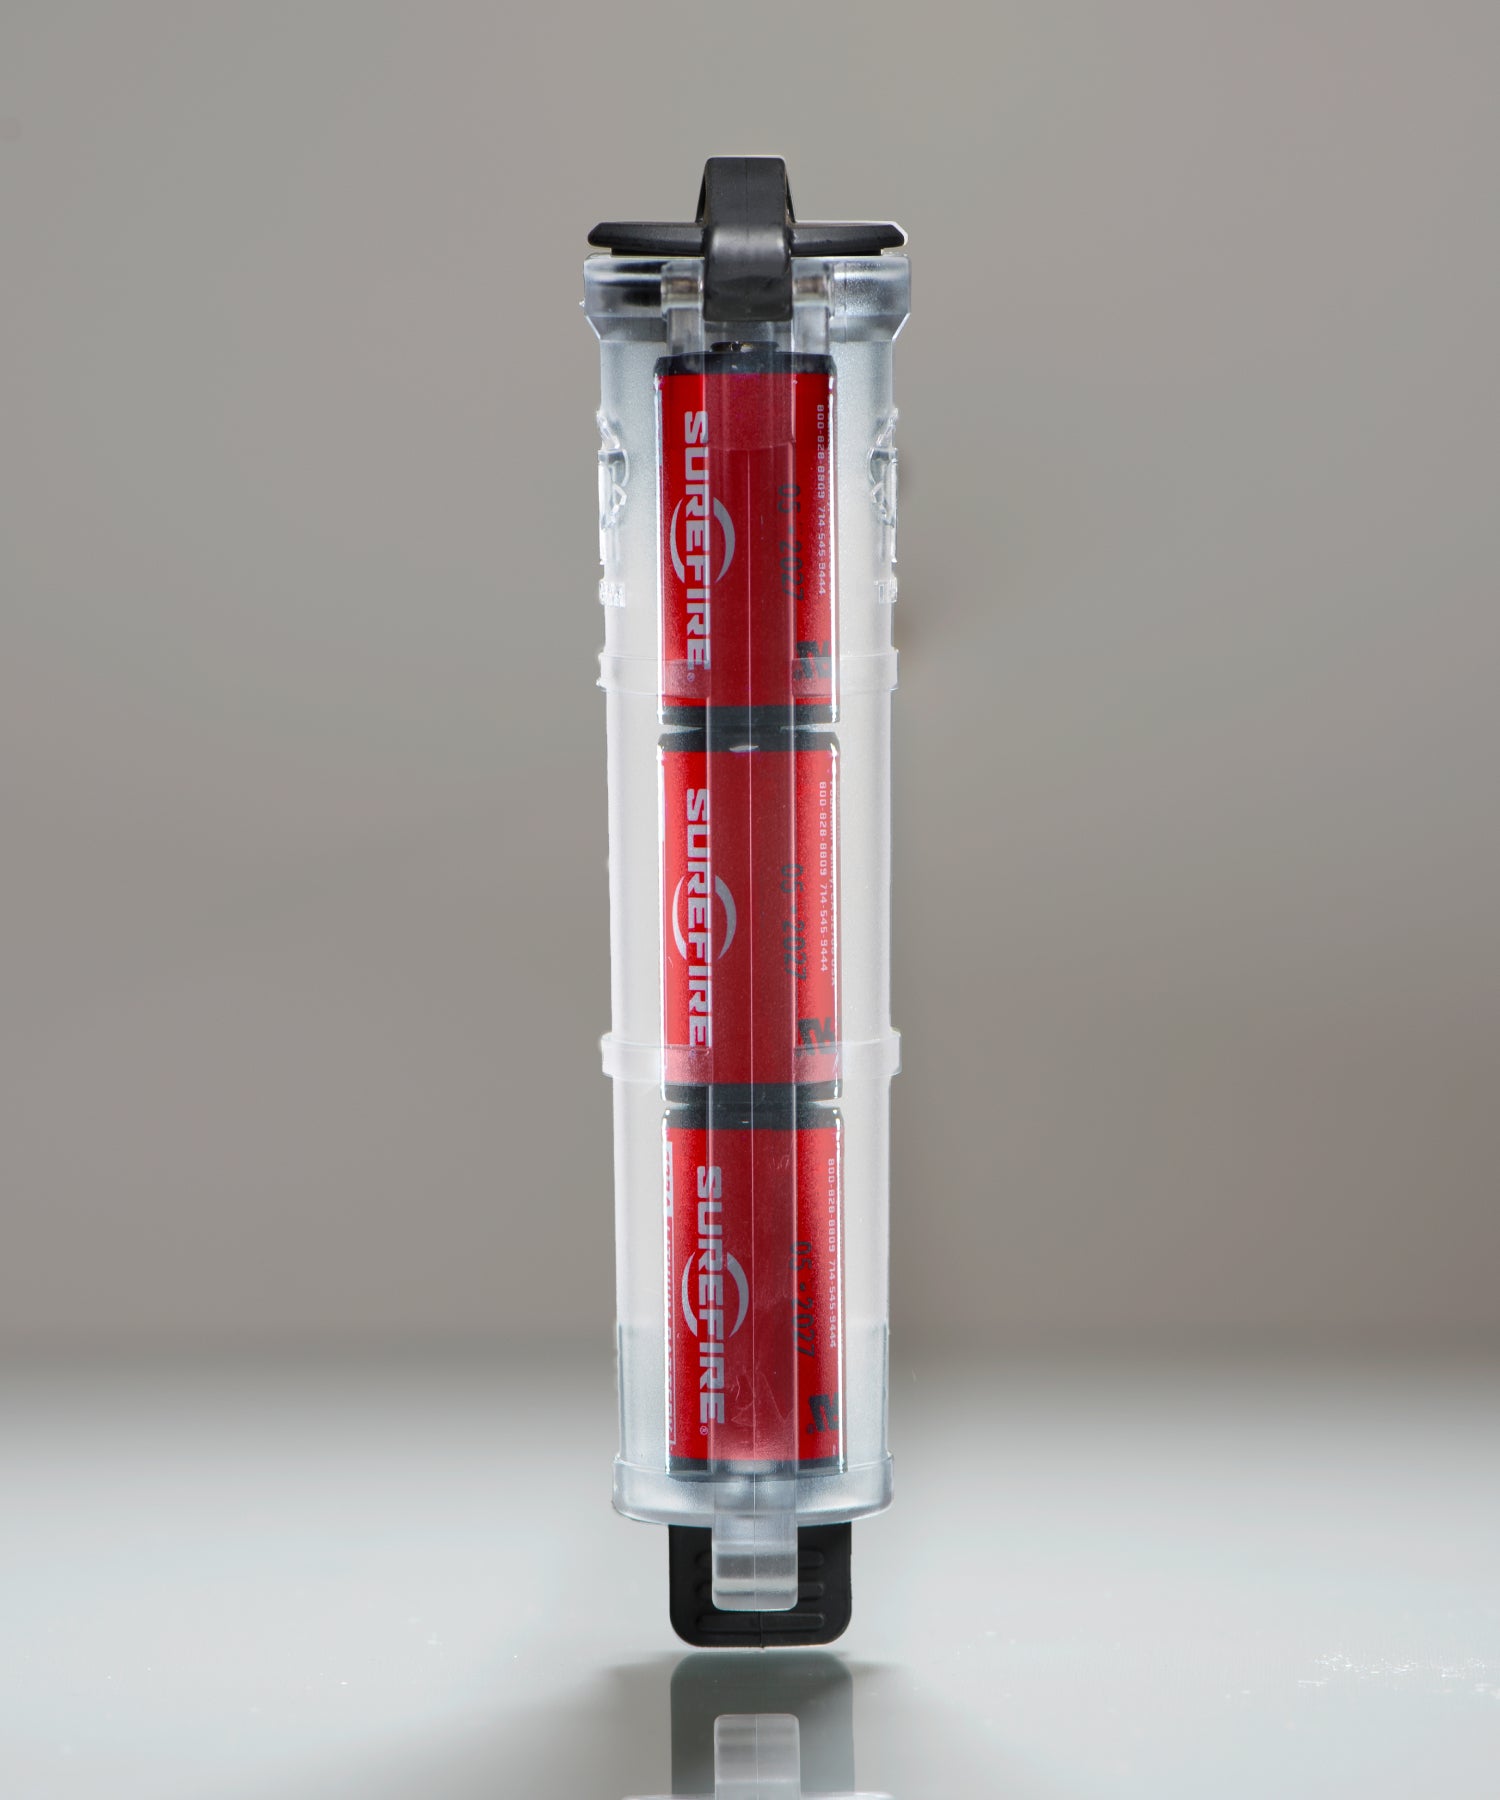 Thyrm CellVault Trasparente mostra le batterie al suo interno